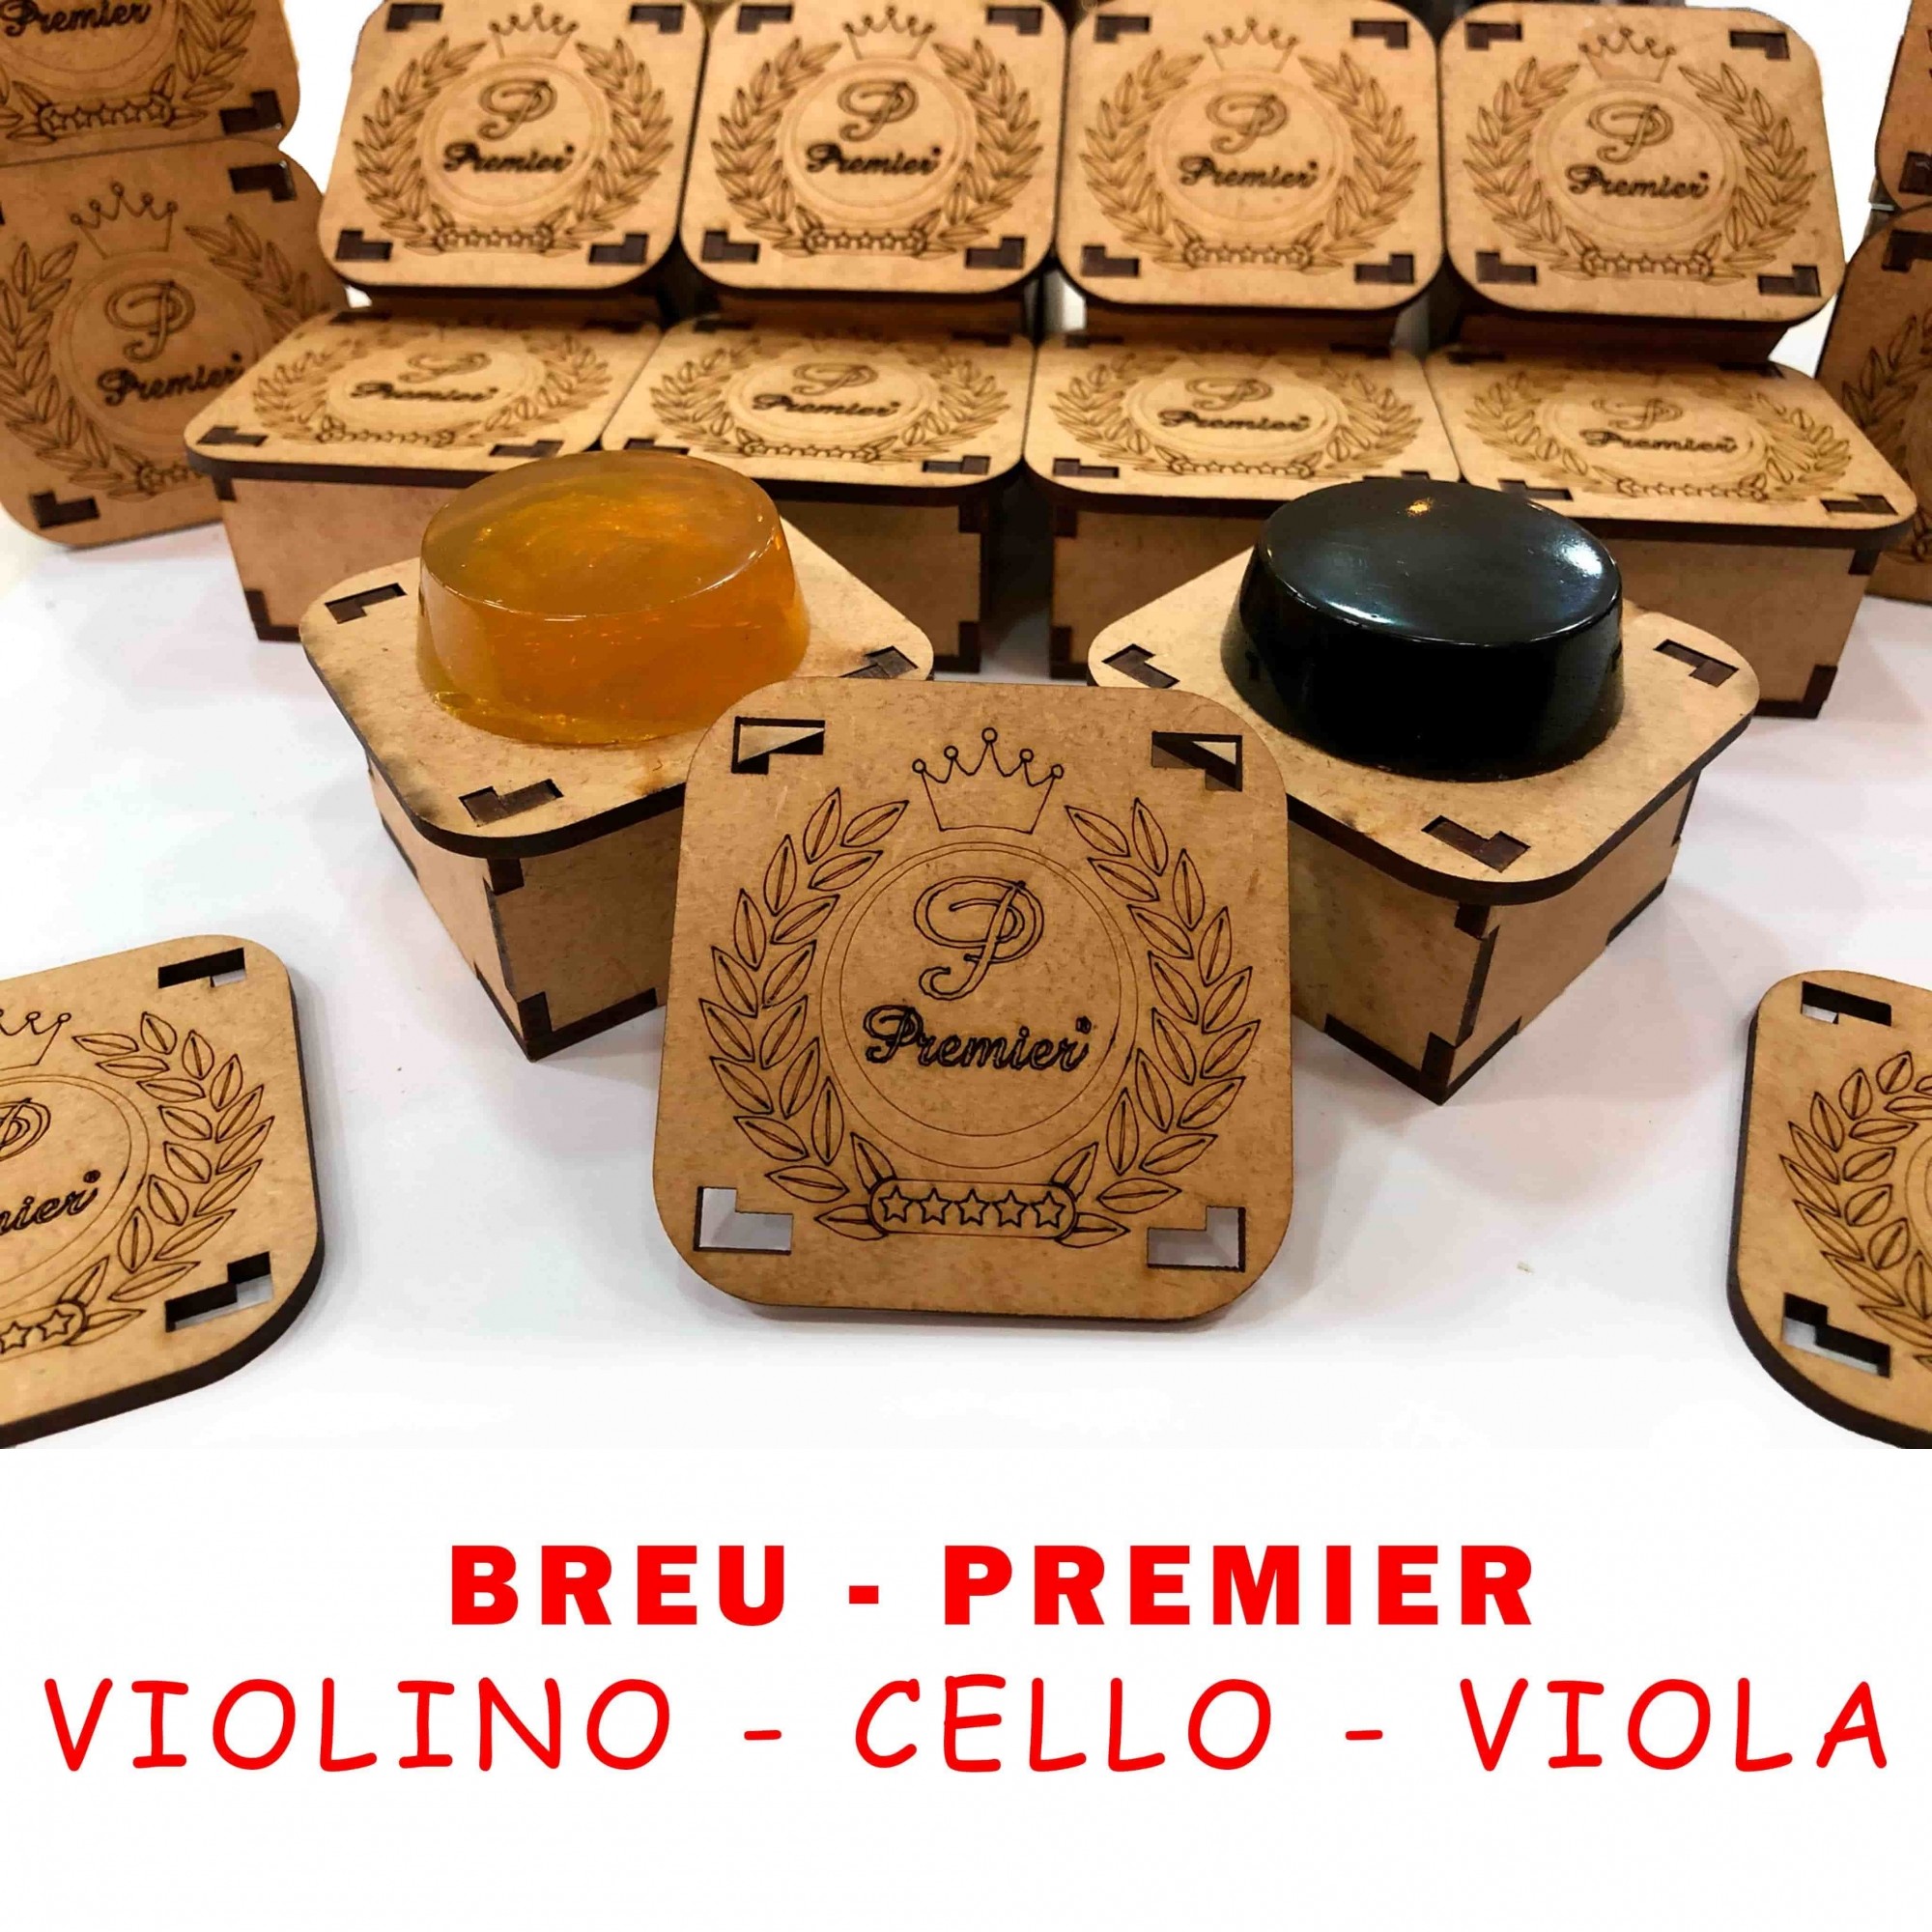 Breu Premier para violino / viola / cello - Preto e natural